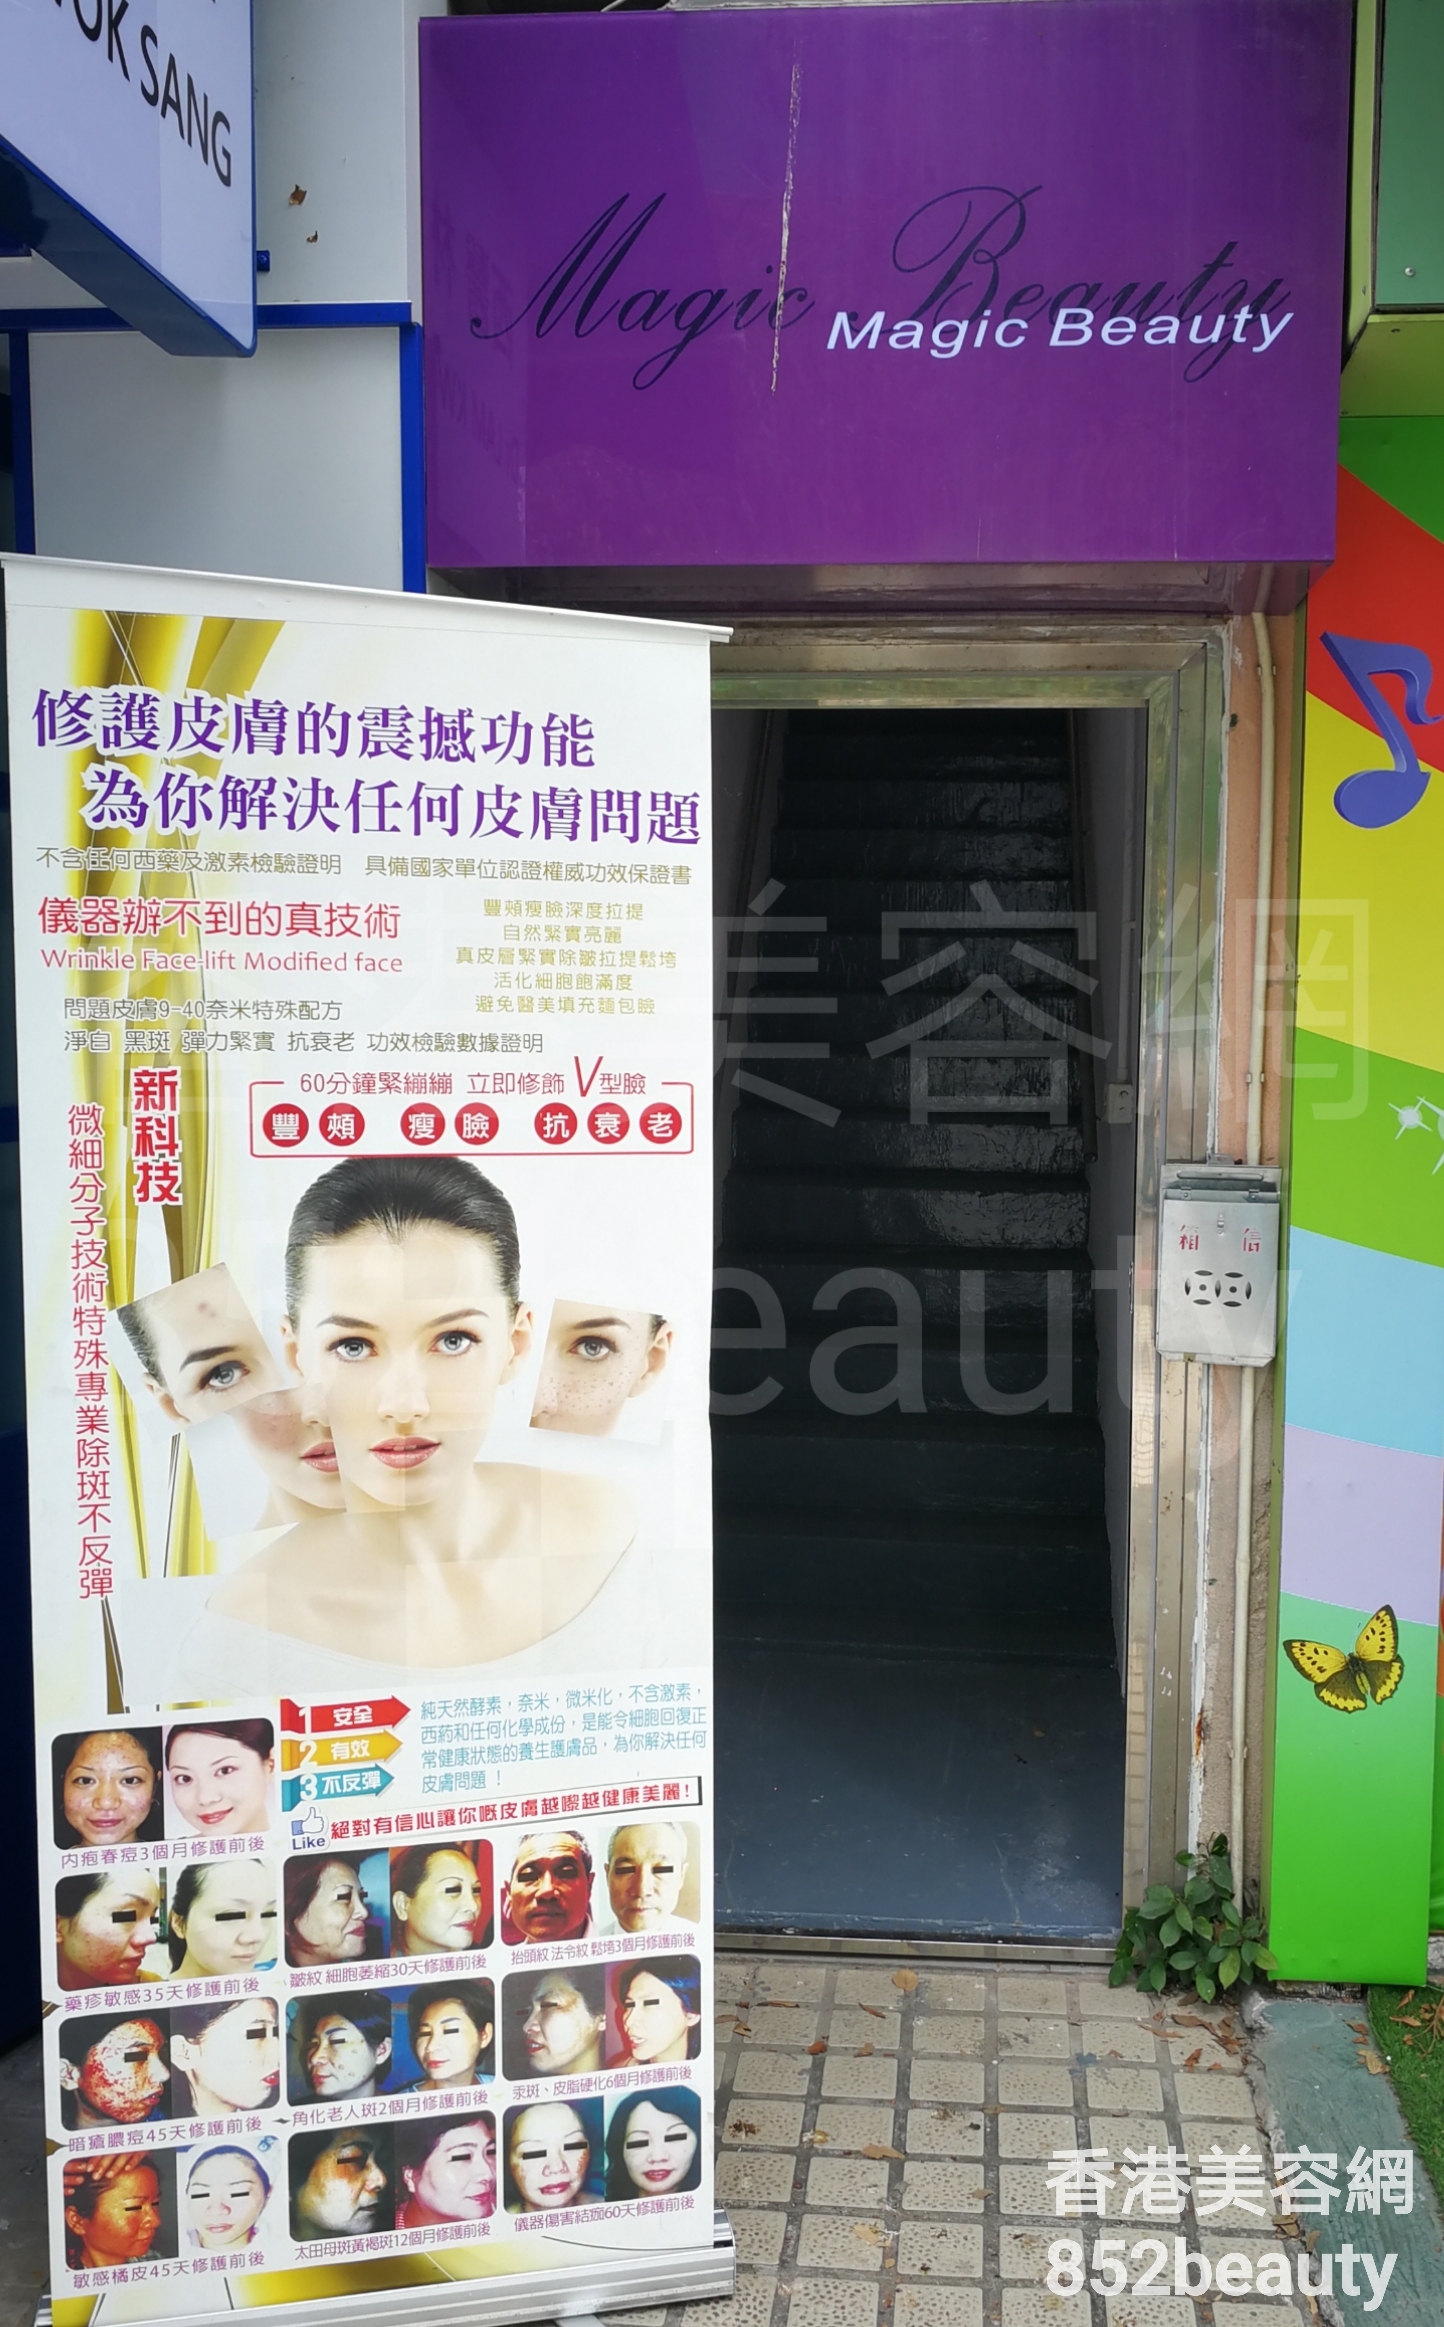 香港美容網 Hong Kong Beauty Salon 美容院 / 美容師: Magic Beauty